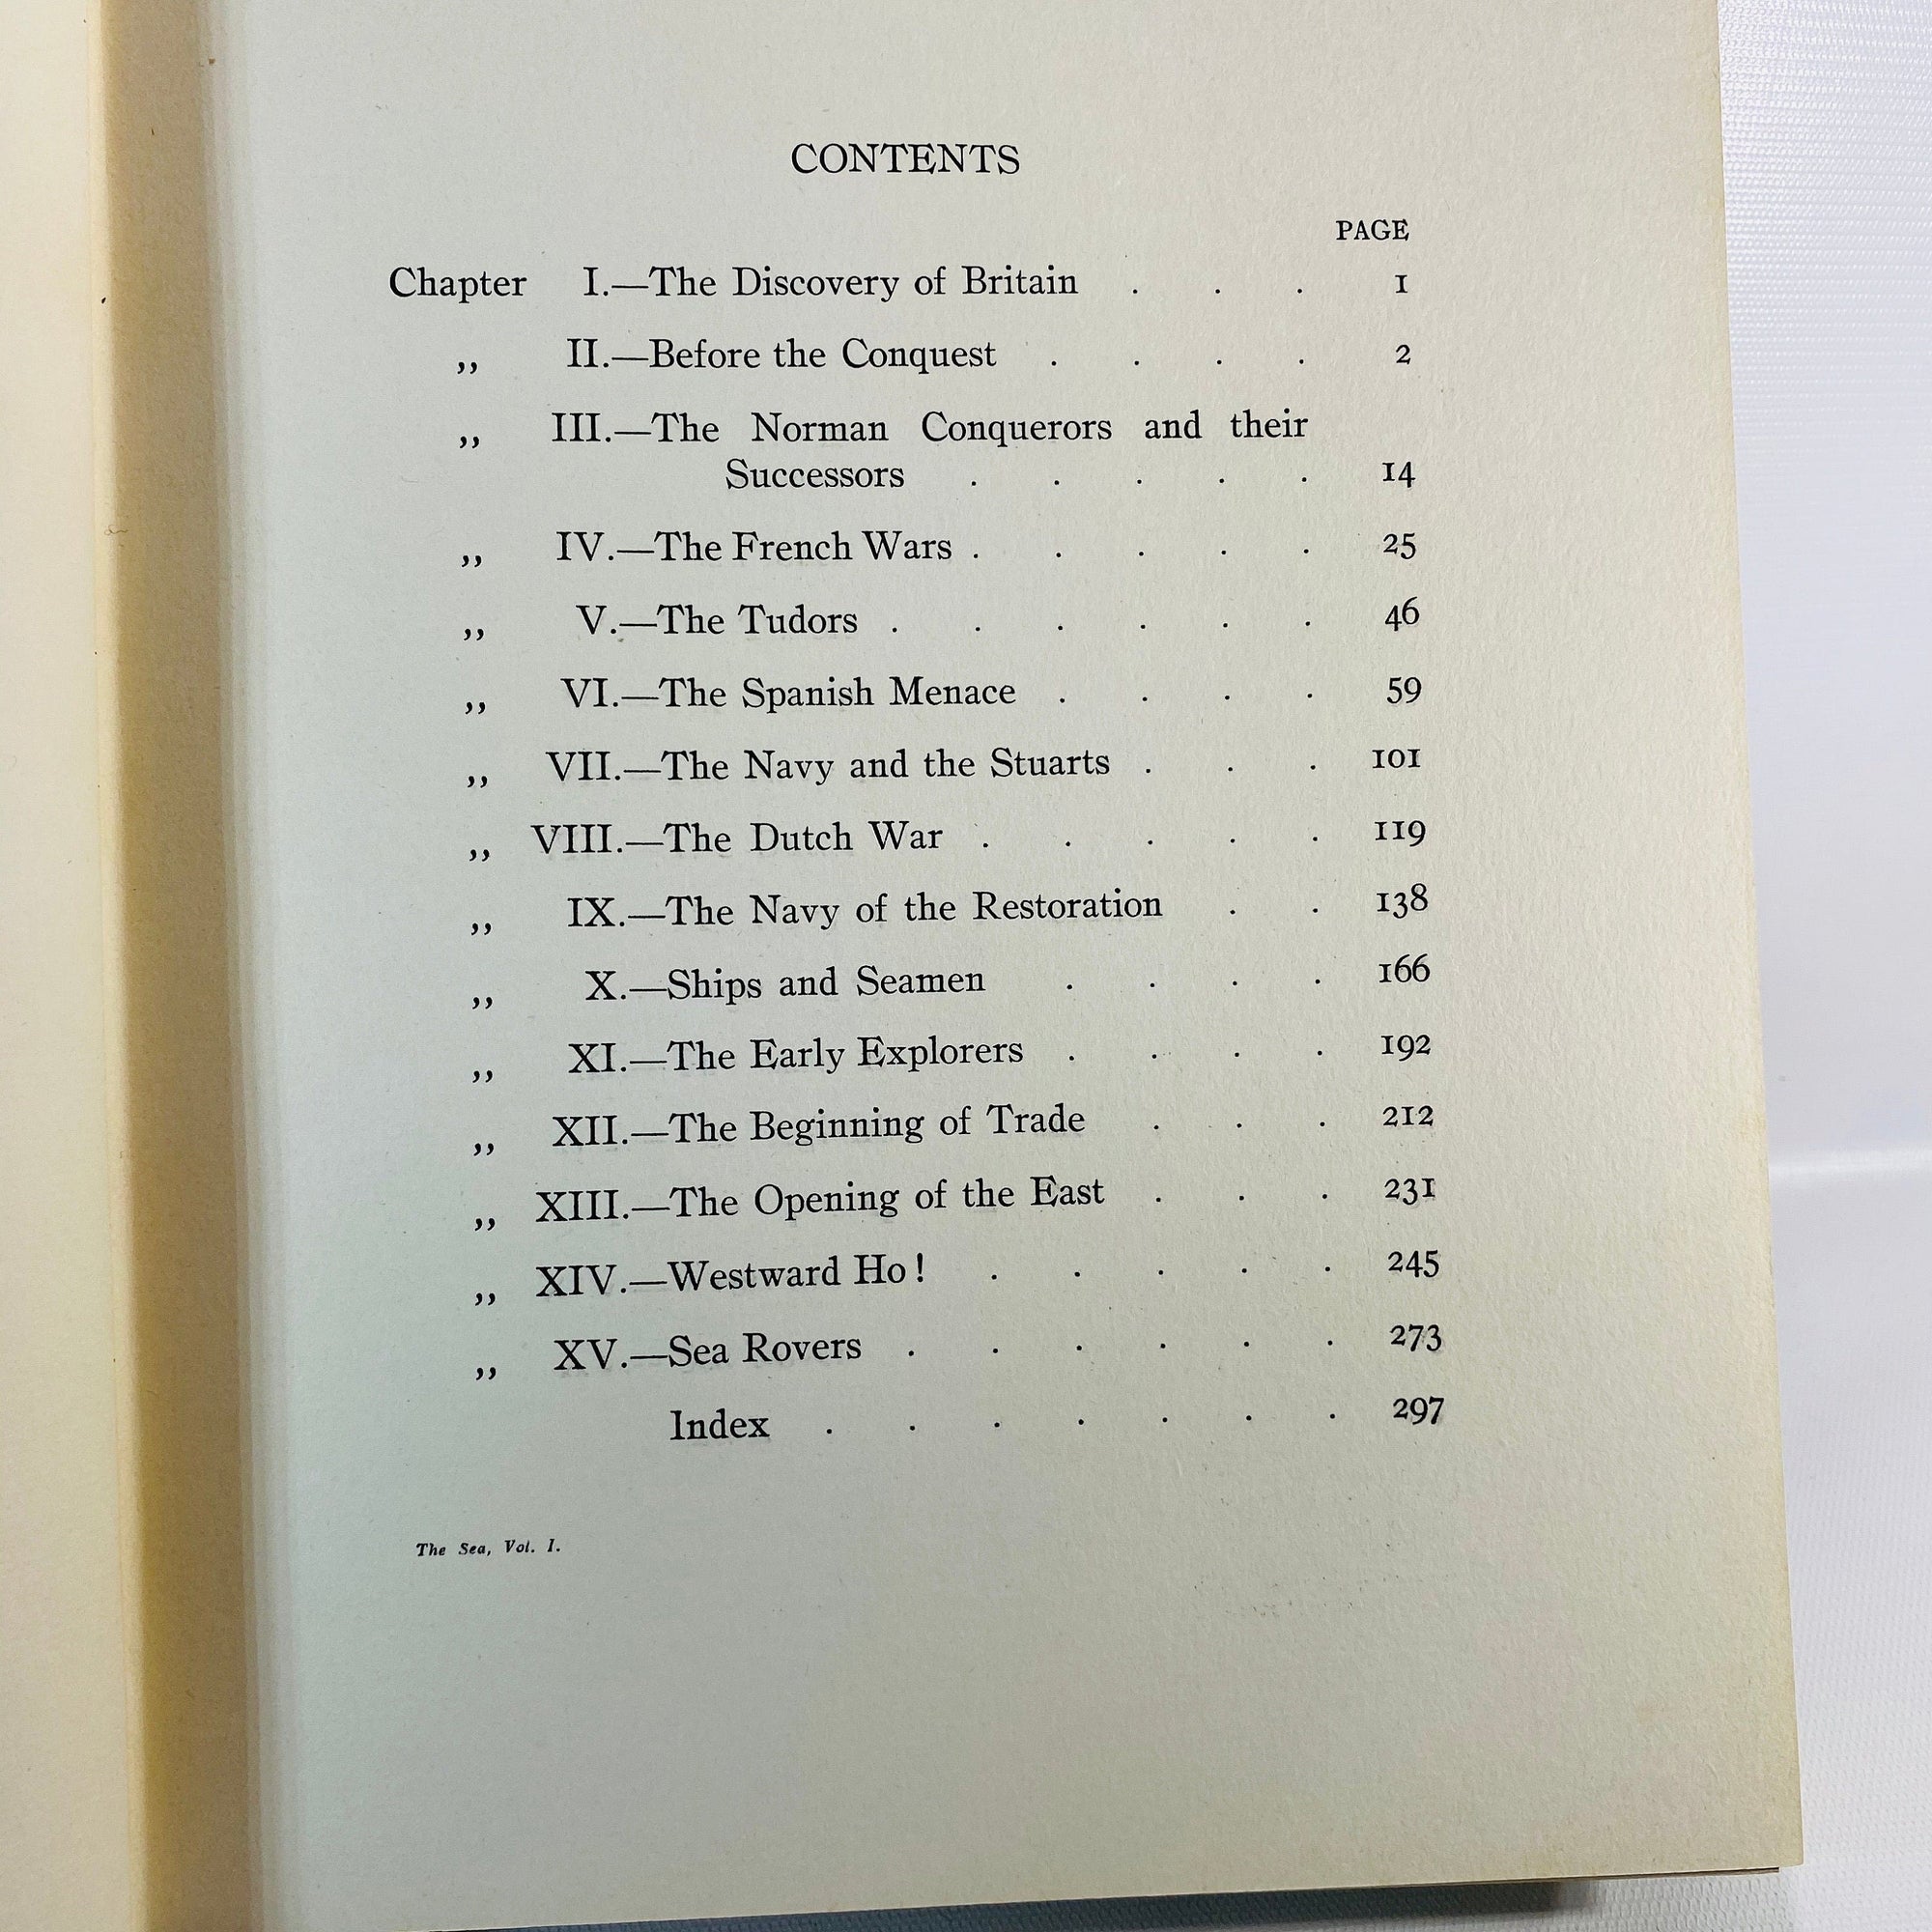 The Sea its History and Romance by Frank C. Bowen Halton & Truscott Smith, 1924-1926 Vintage Book